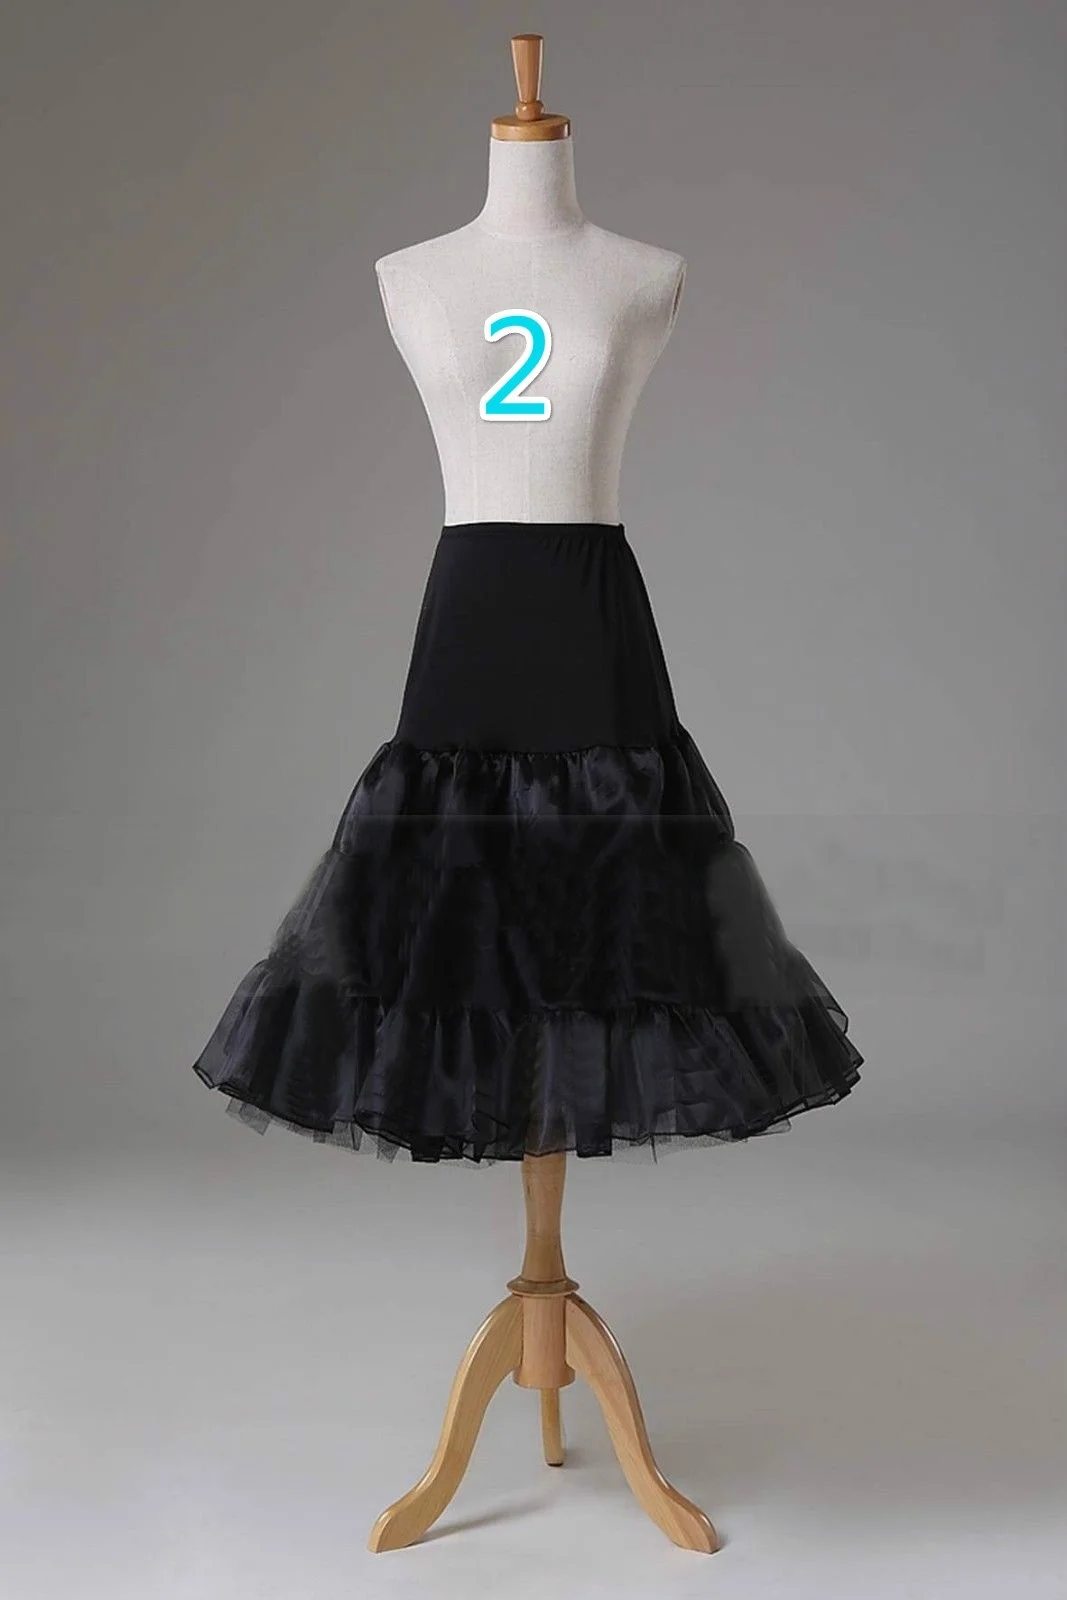 SHEWG YI DRESS Black Bridal Petticoat Crinoline Underskirt Hoophooplessmermaidfishtail -Outlet Maid Outfit Store HTB12LEEXvfsK1RjSszbq6AqBXXaG.jpg